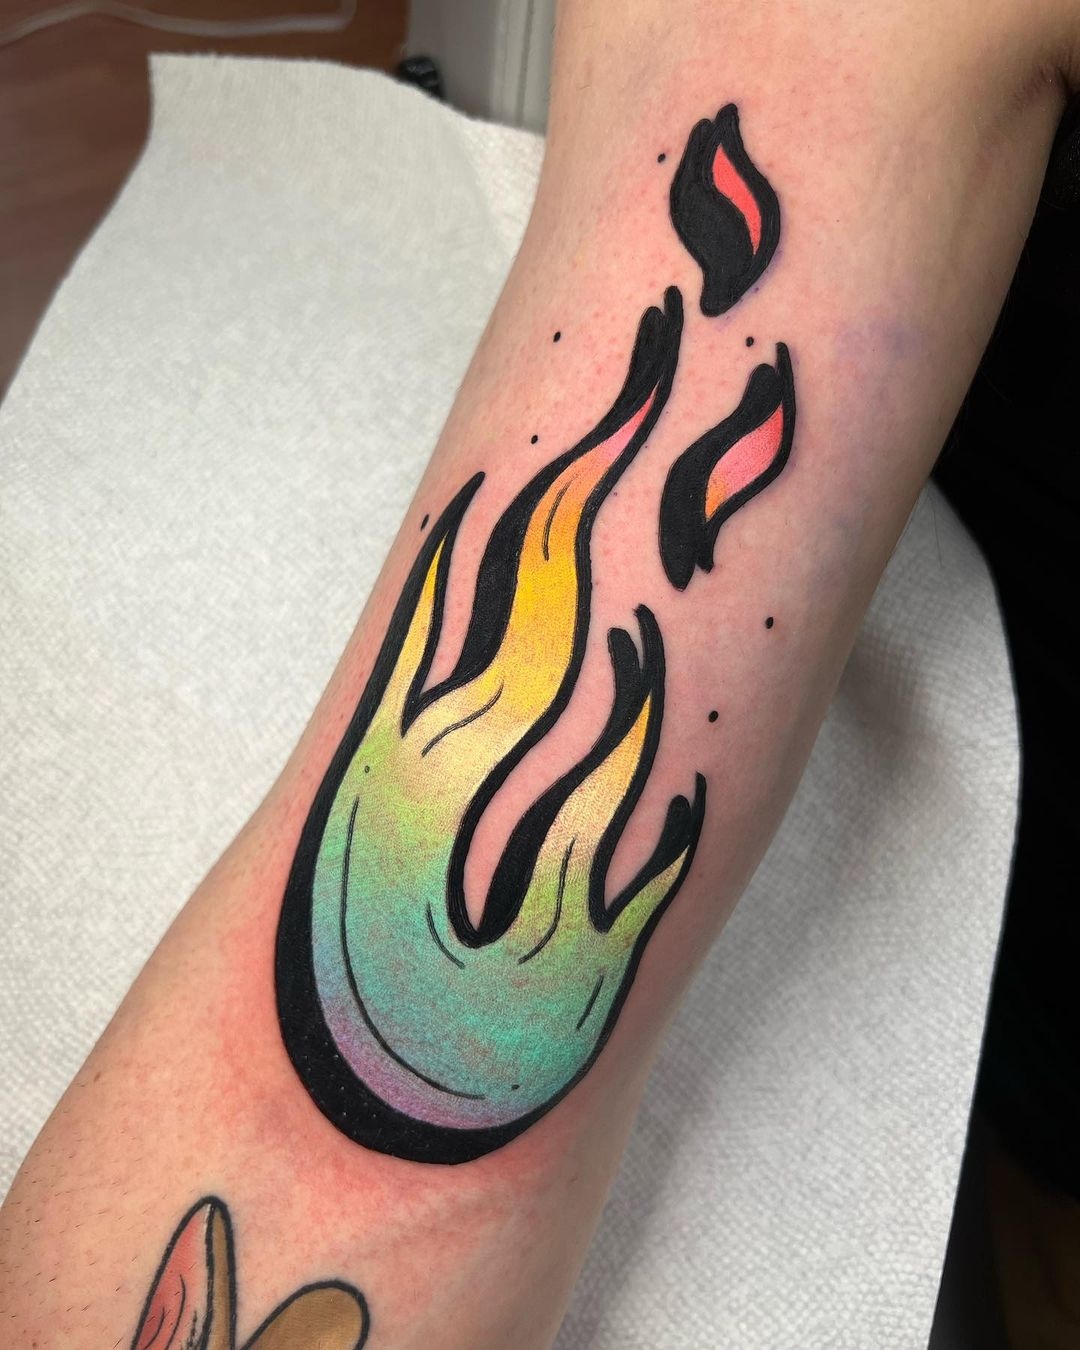 Tattoos Fire Signs Will Love | CafeMom.com